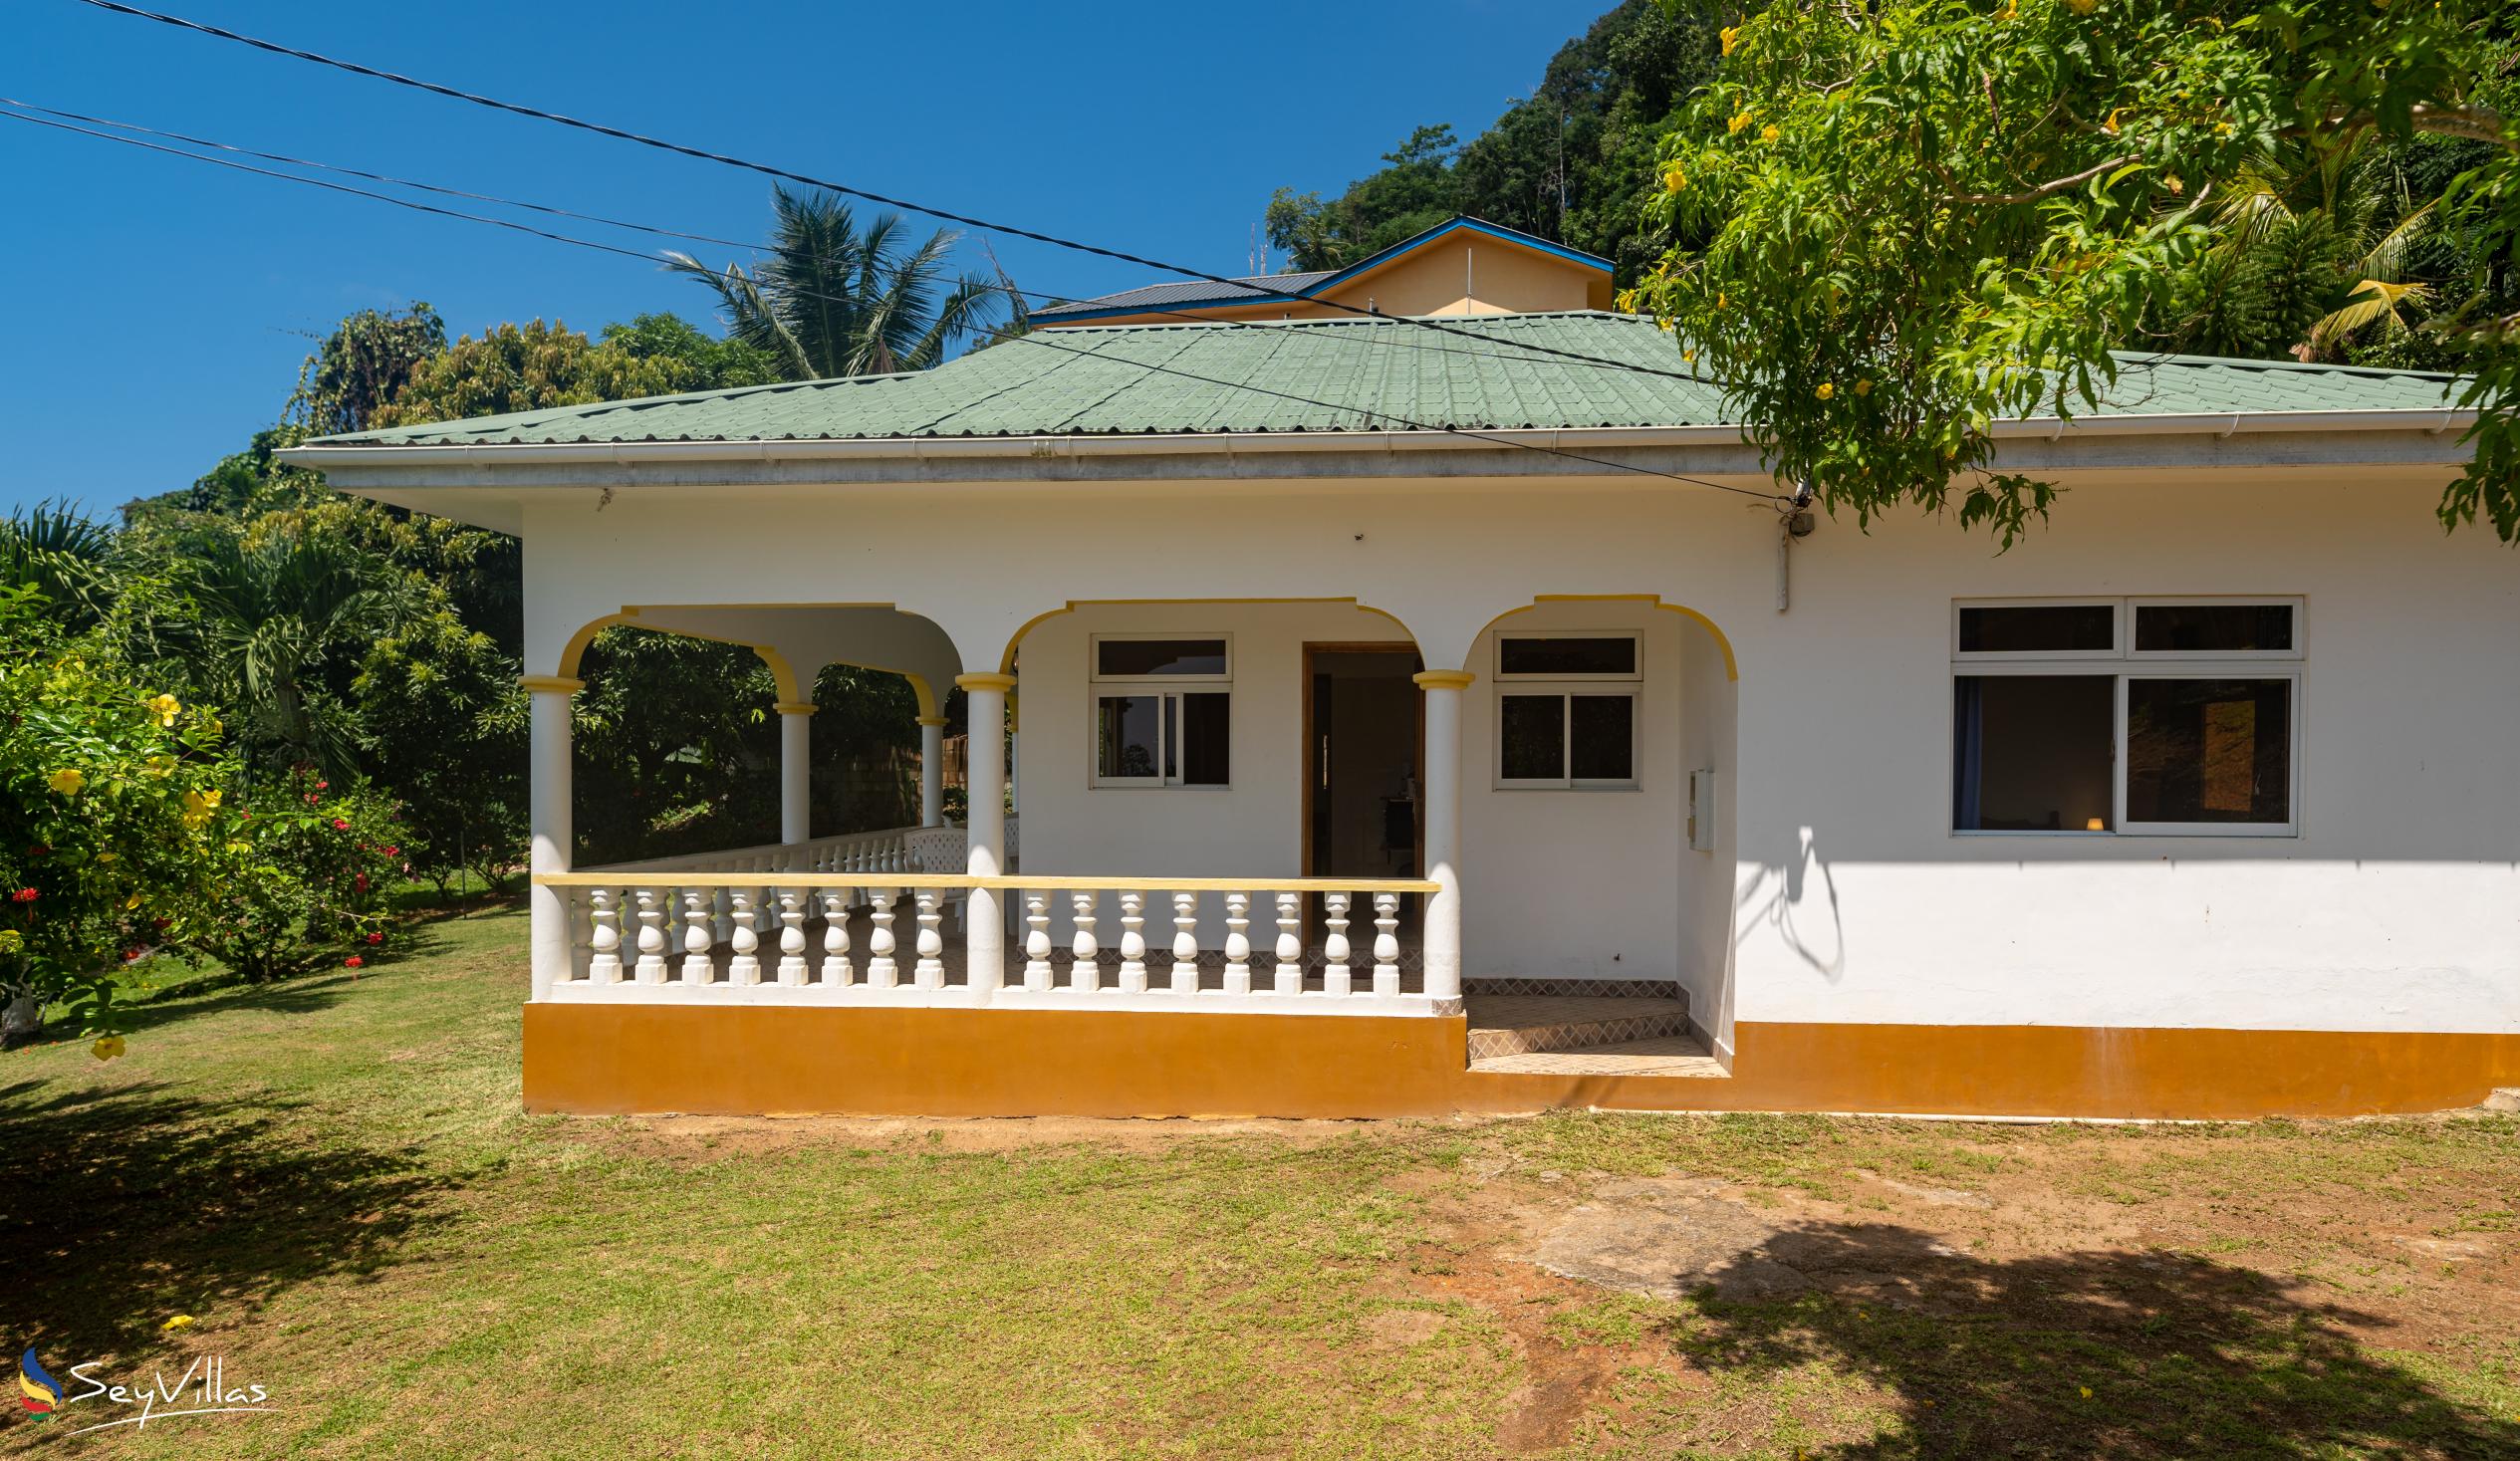 Foto 70: Maison Marikel - Villa con 2 camere - Mahé (Seychelles)